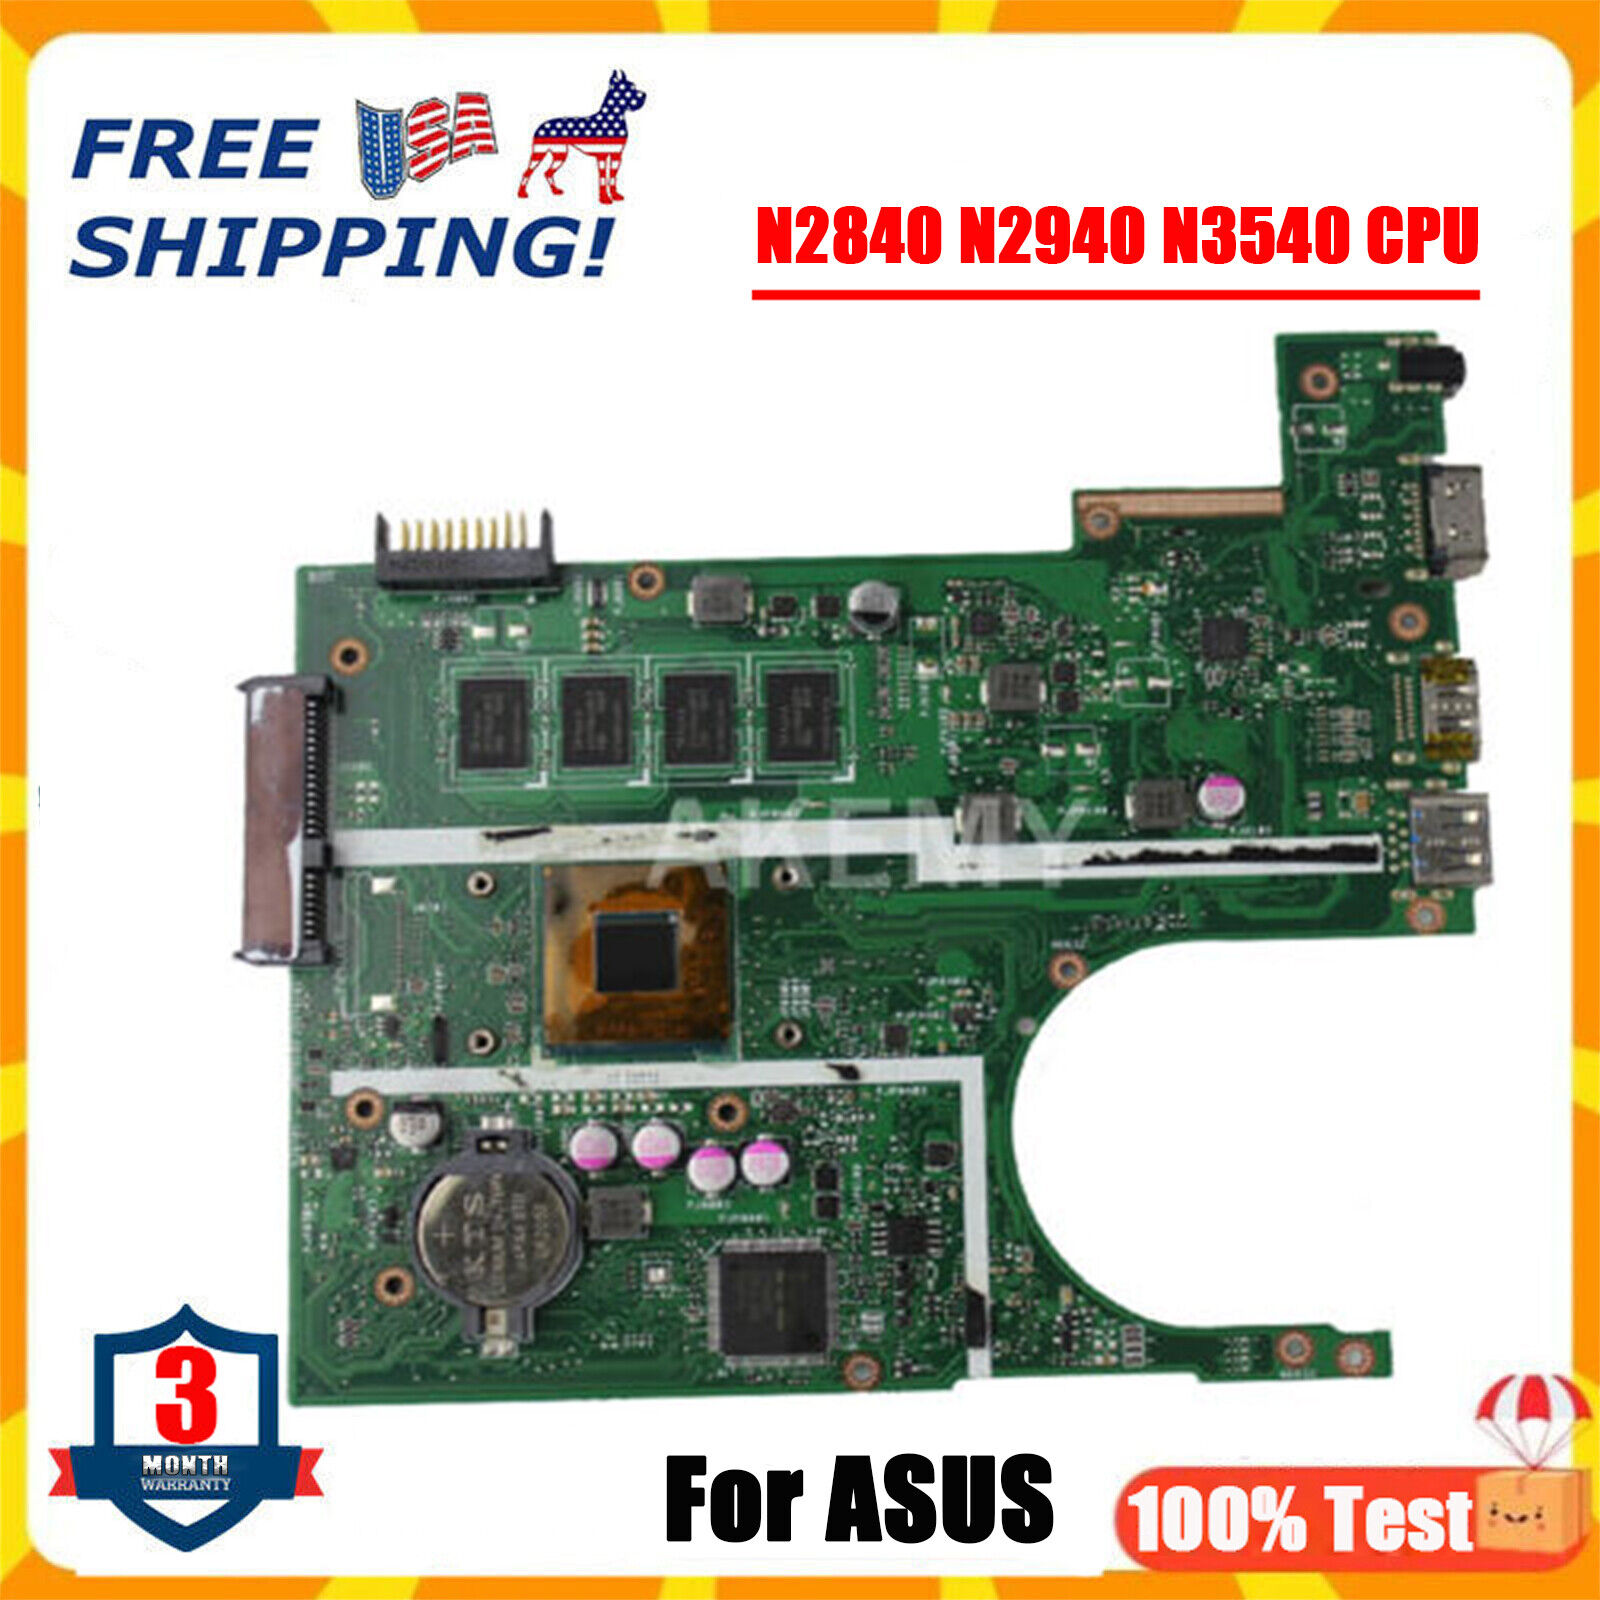 FOR ASUS X200MA F200MA X200M MOTHERBOARD N2840 N2940 N3540 CPU 2GB 4GB RAM